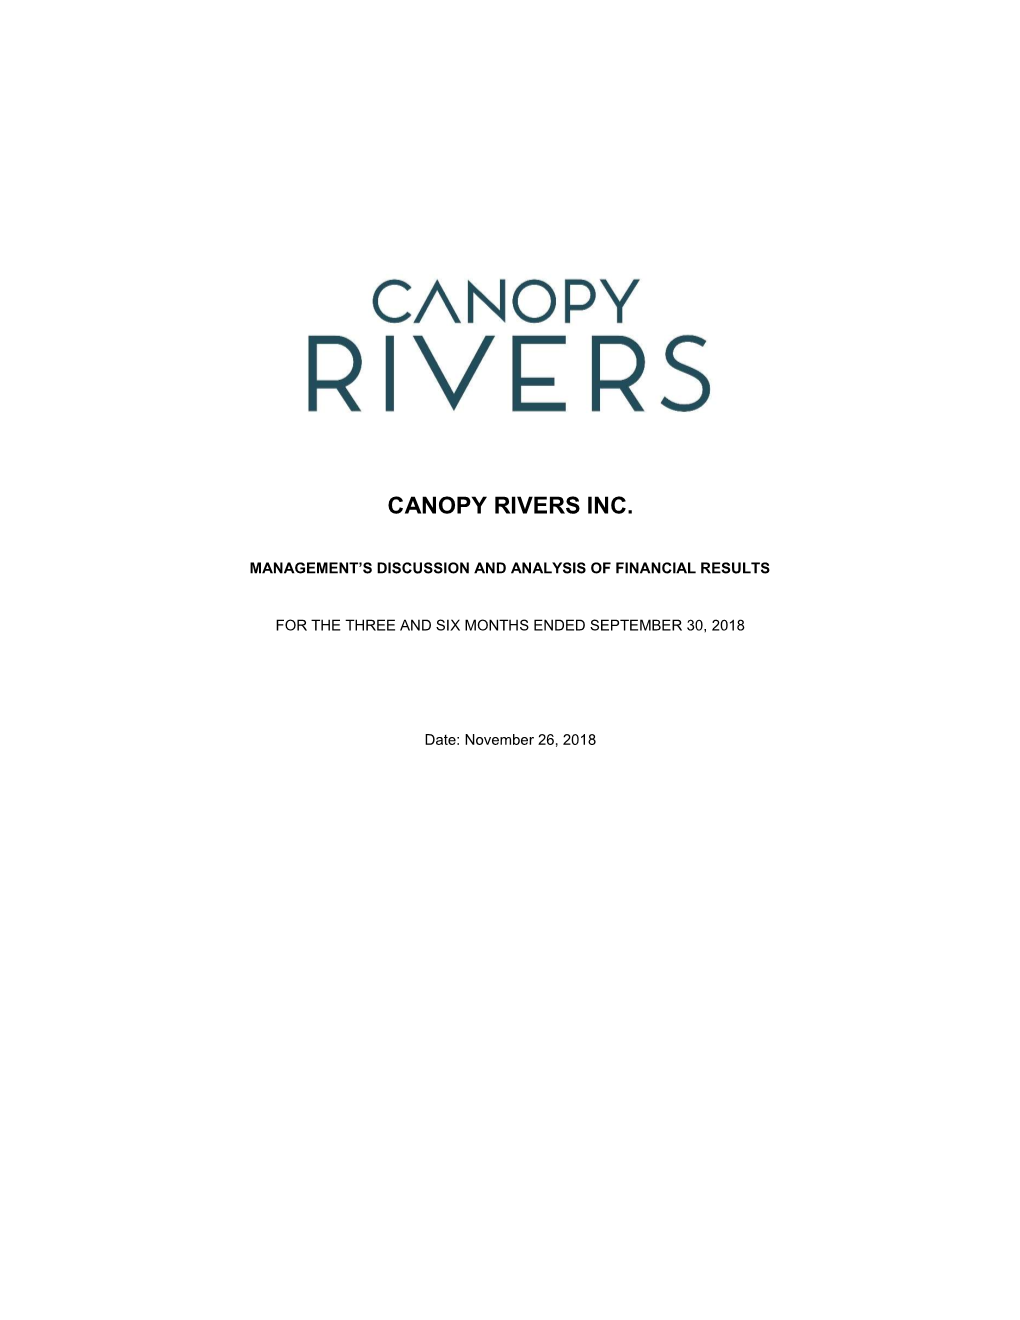 Canopy Rivers Inc